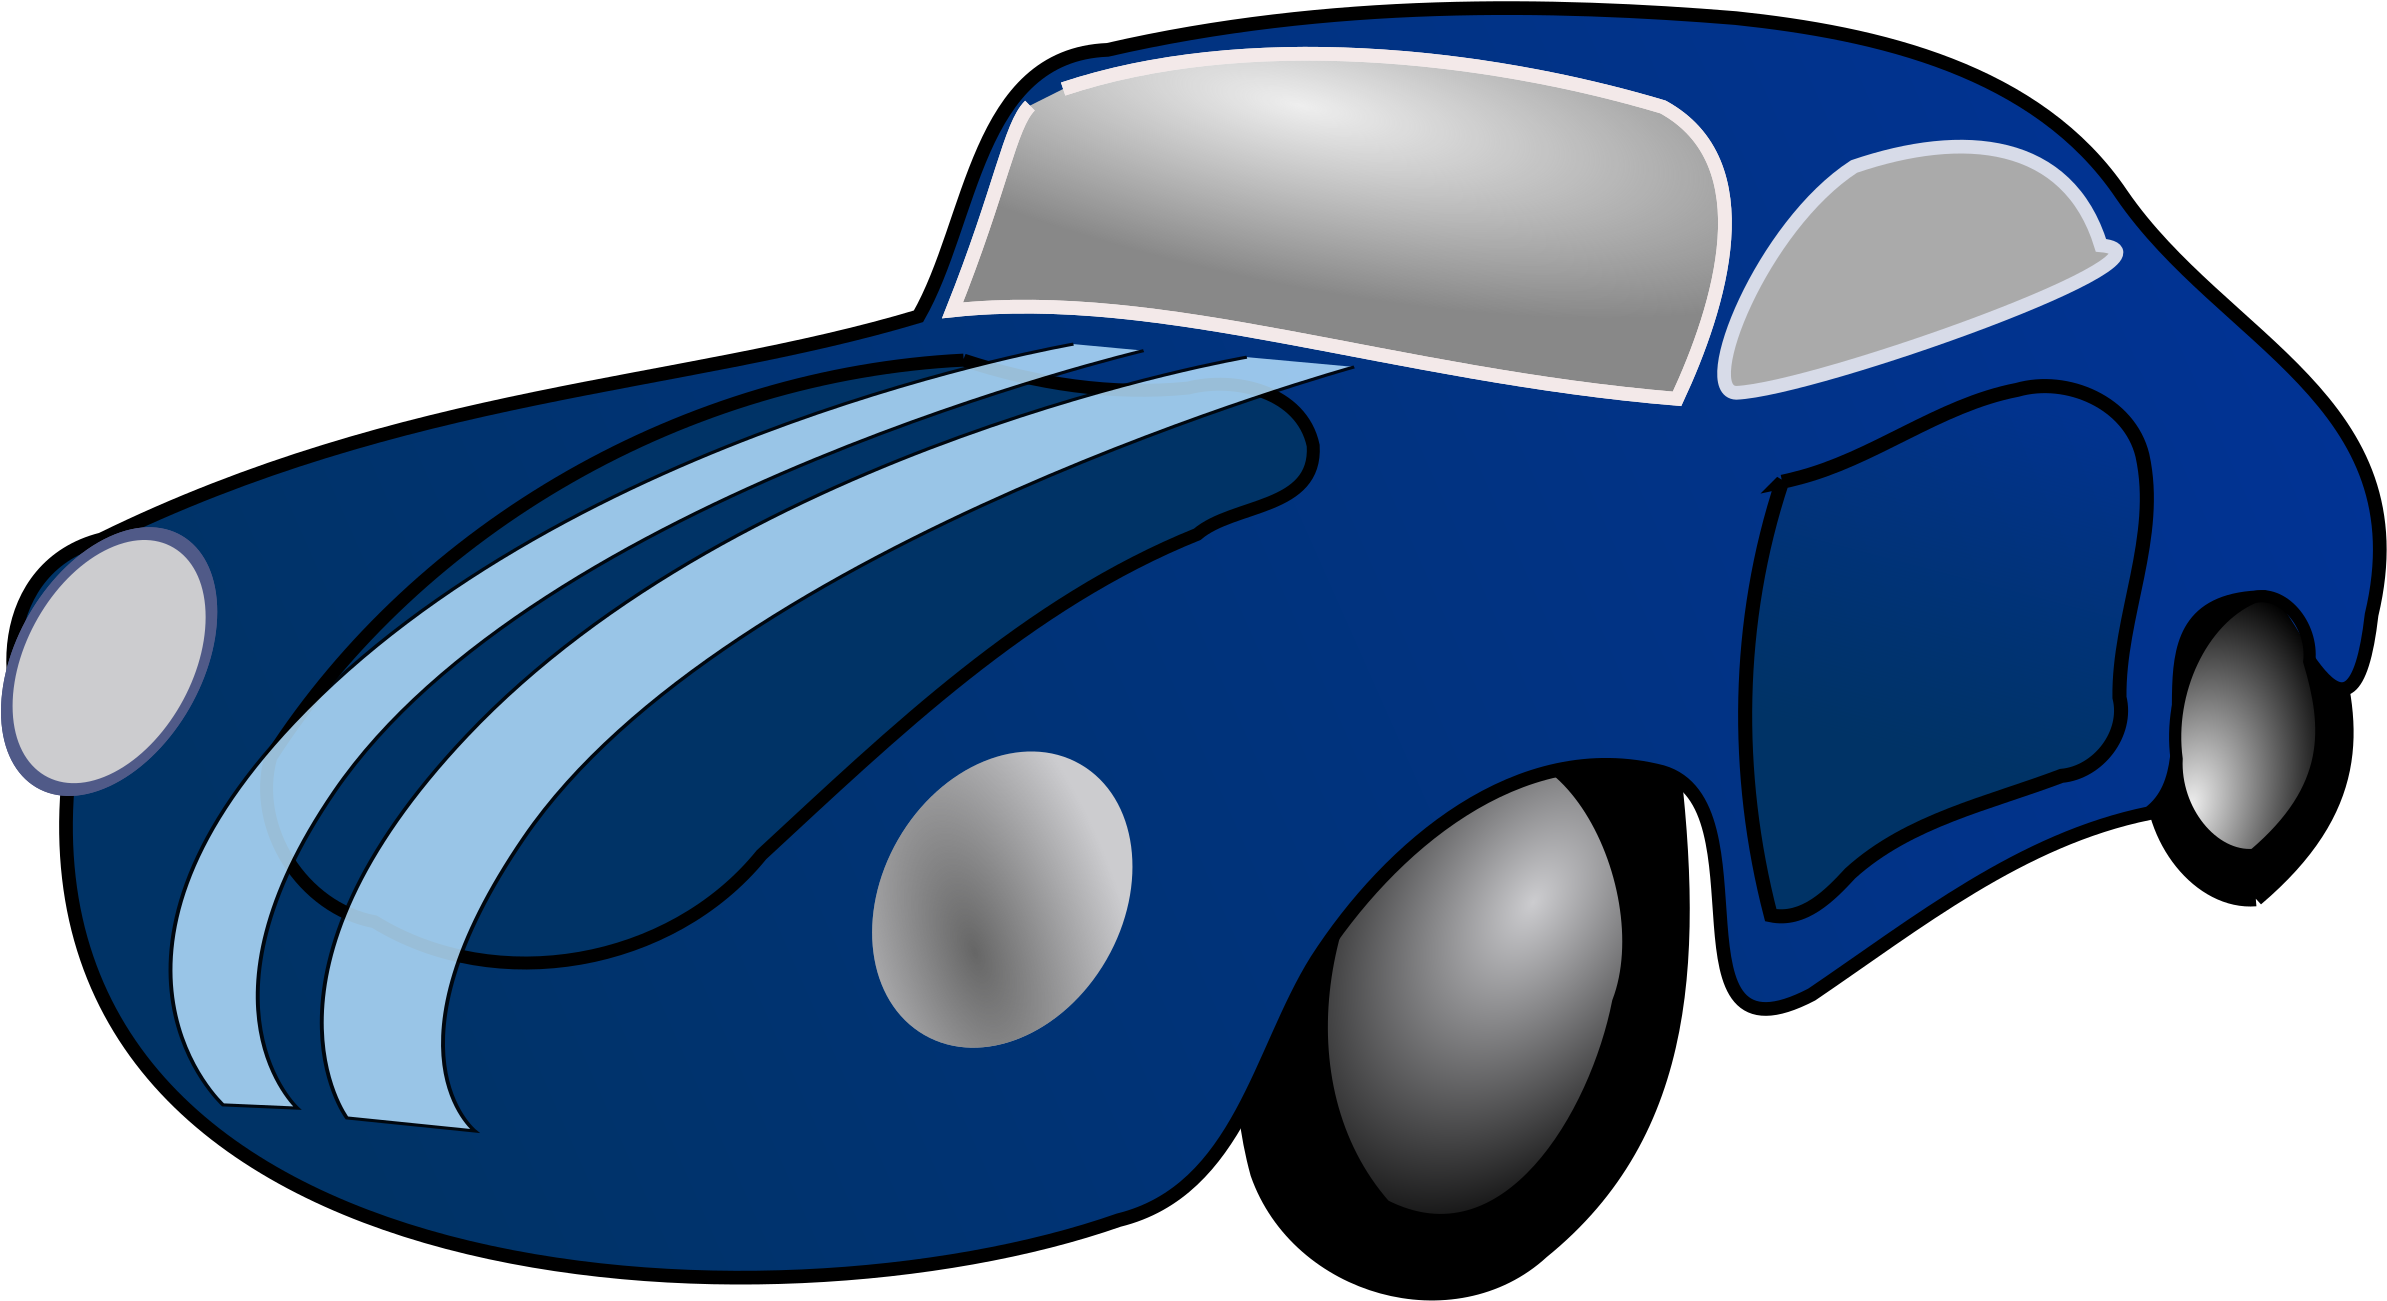 A Cartoon Blue Car With White Stripes